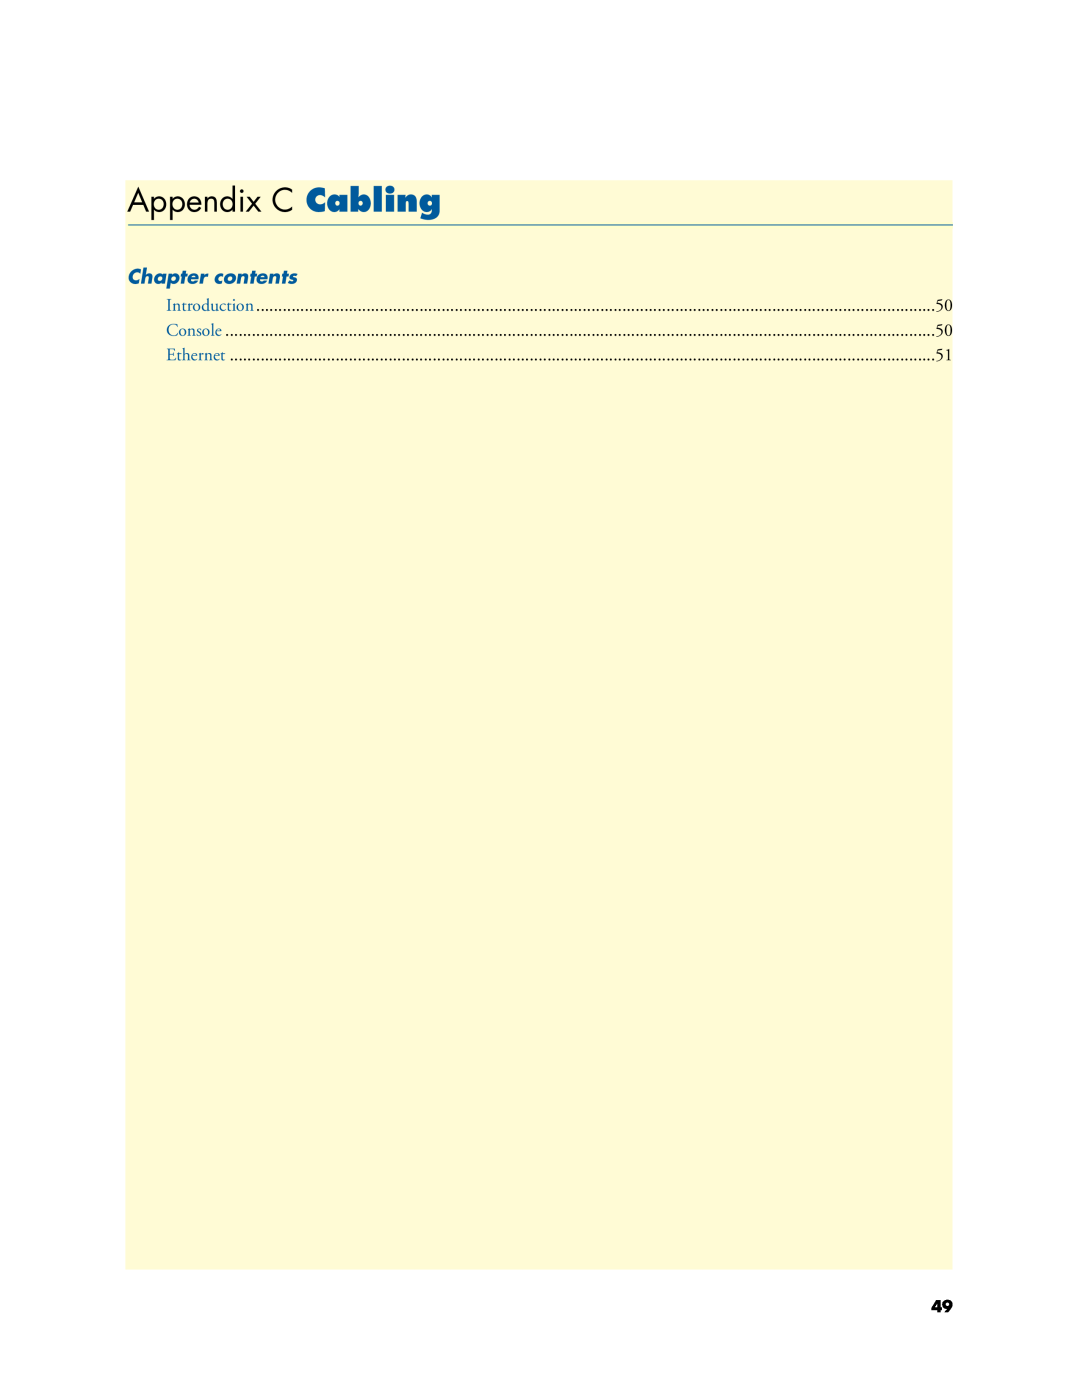 Patton electronic 3034/3038 manual Appendix C Cabling, Chapter contents 